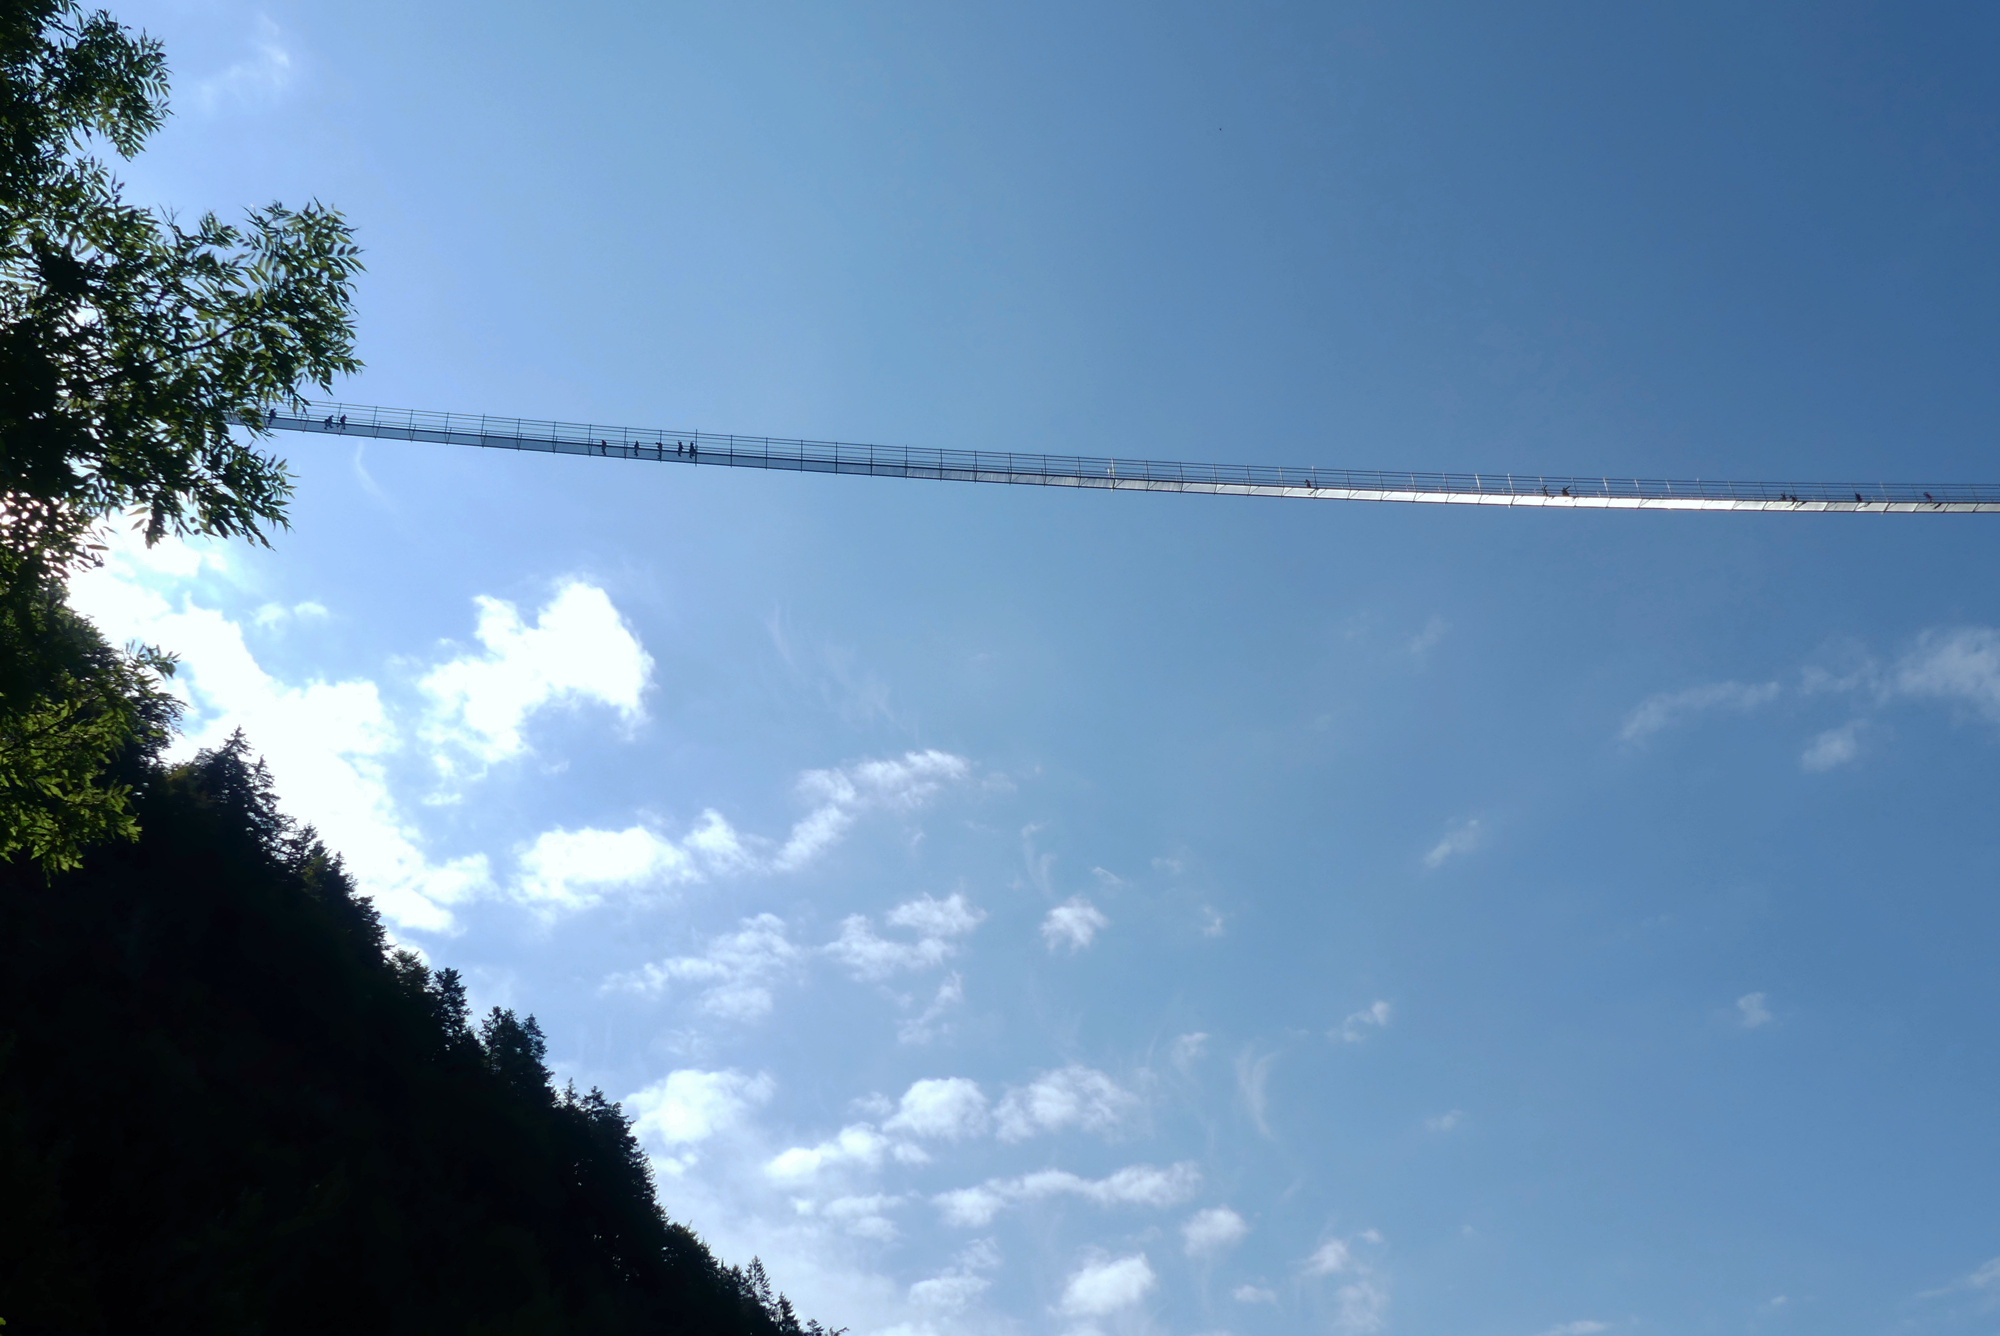 ehrenberg-highline-suspension-bridge-4.jpg